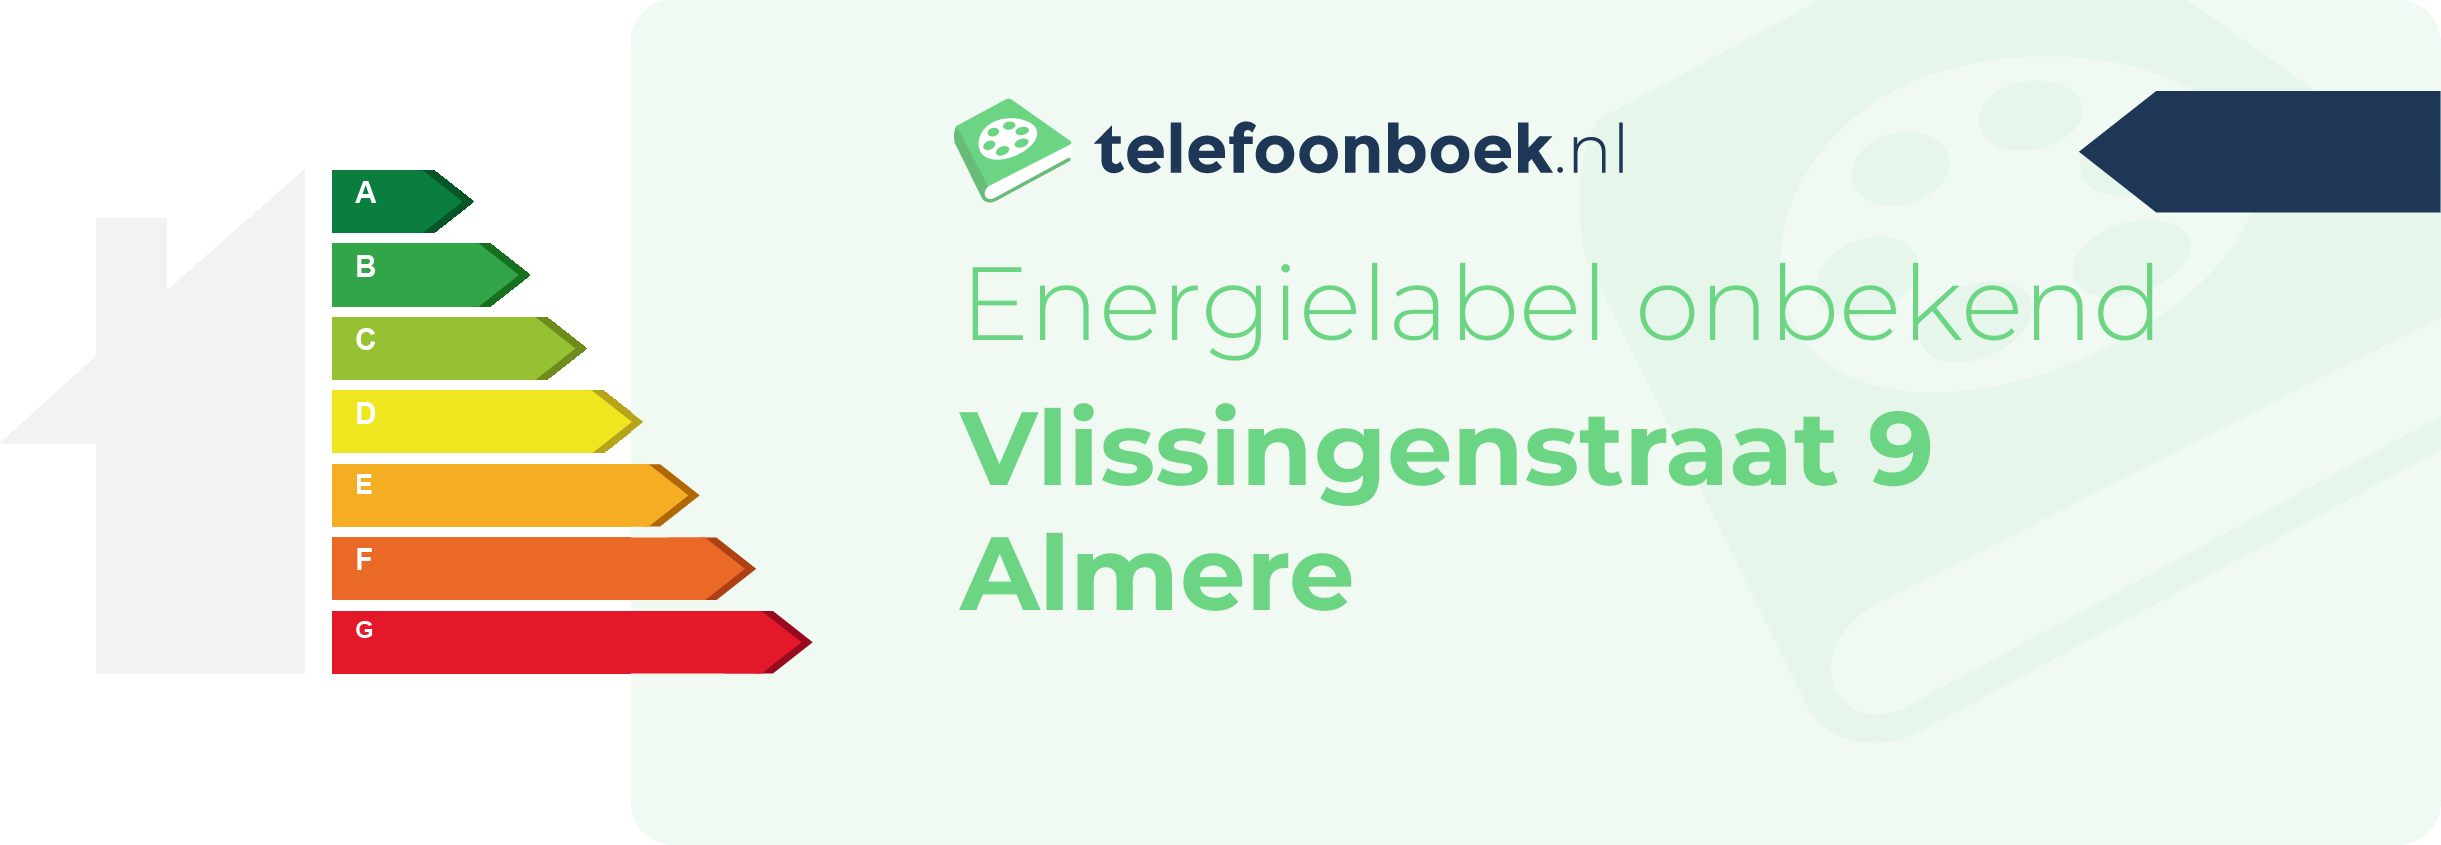 Energielabel Vlissingenstraat 9 Almere